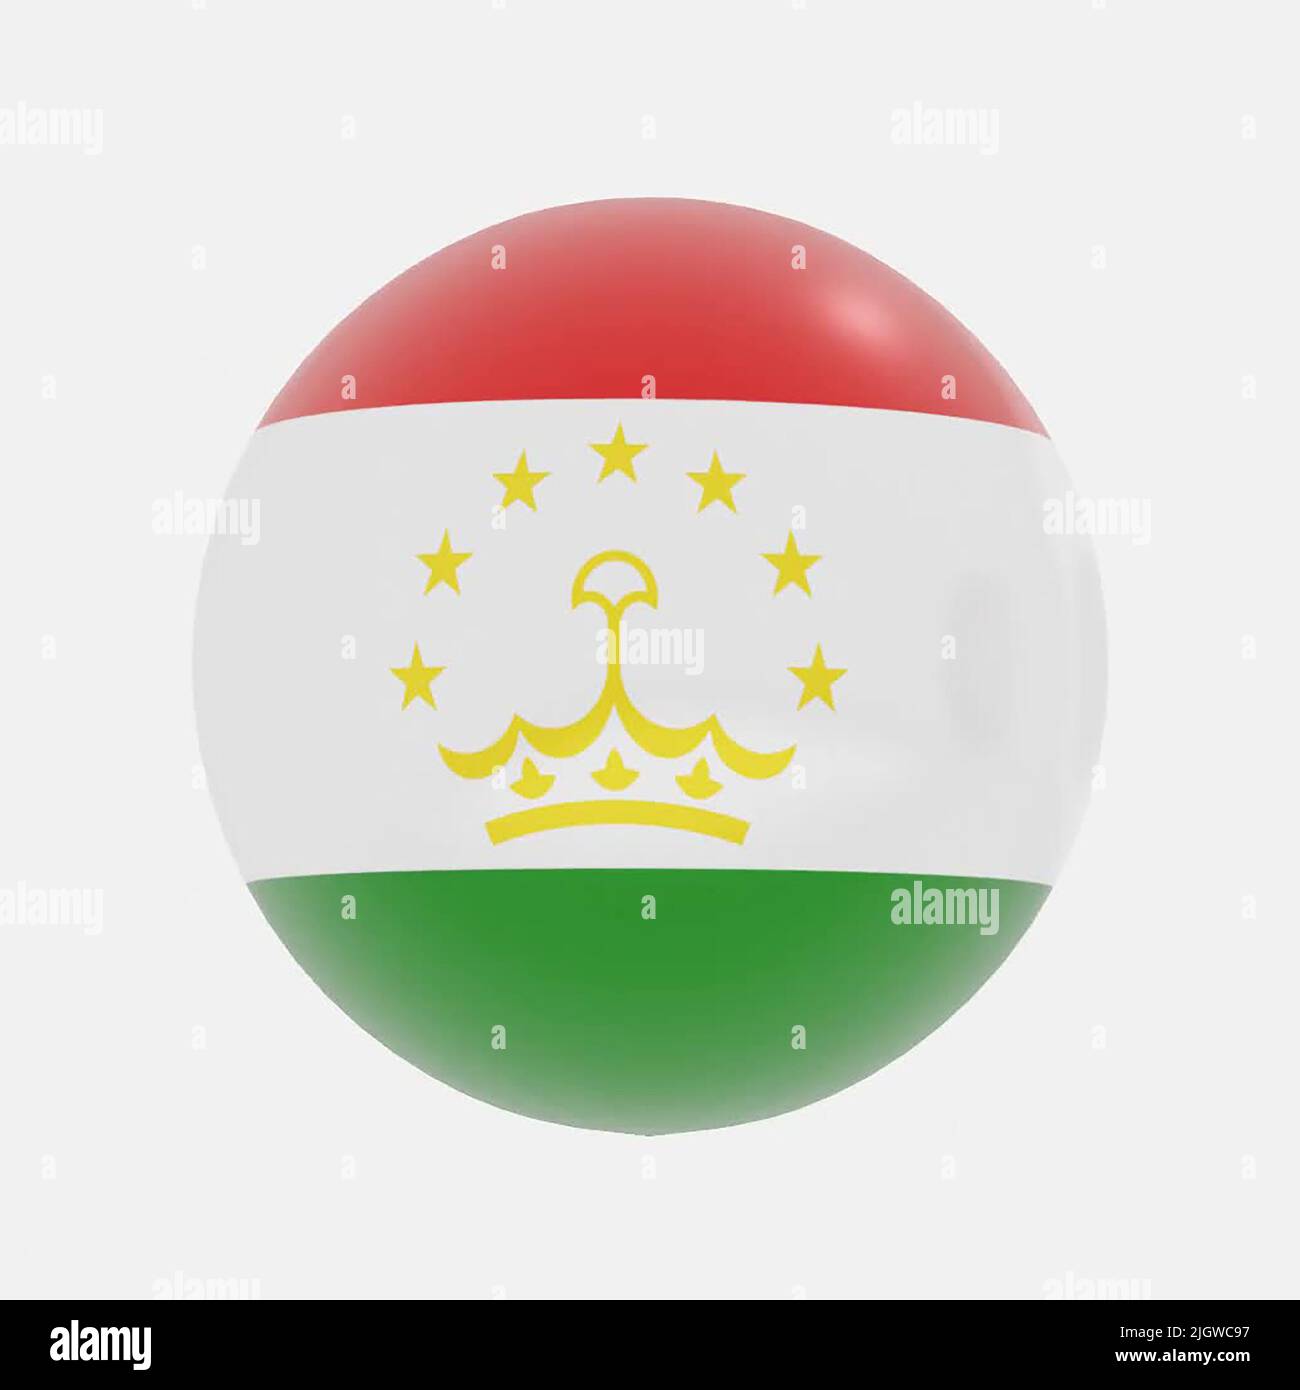 3d render of globe in Tajikistan flag for icon or symbol. Stock Photo